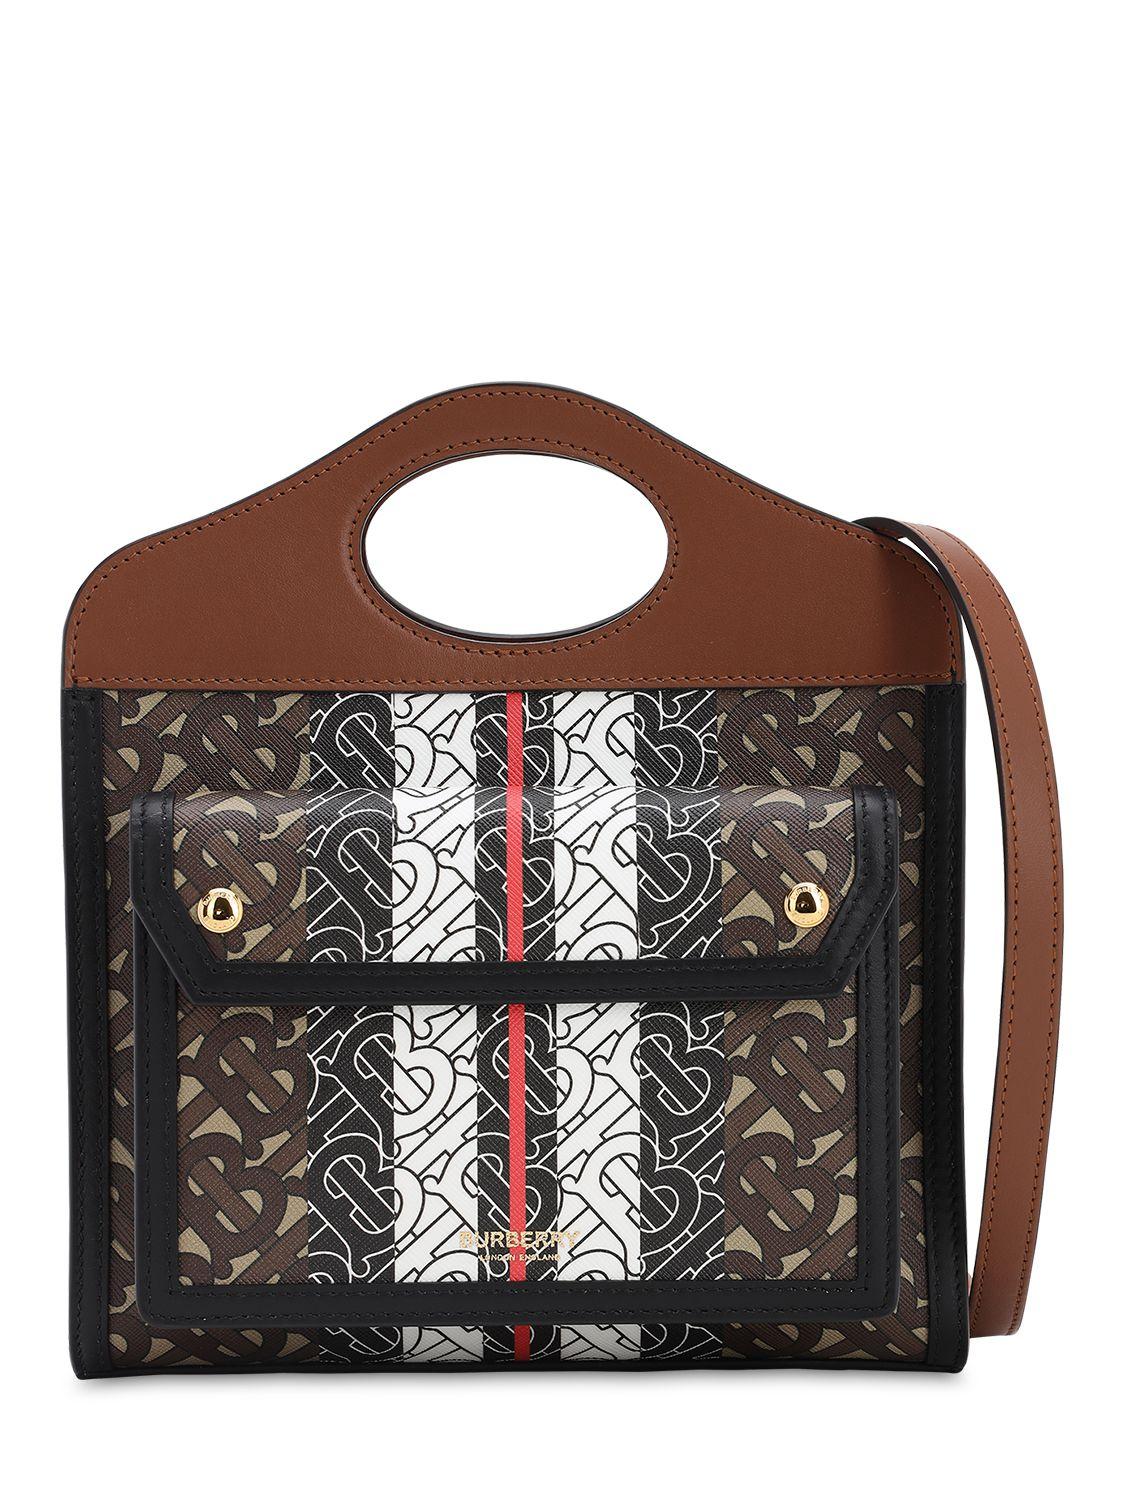 Burberry handbag in e-canvas with monogram print